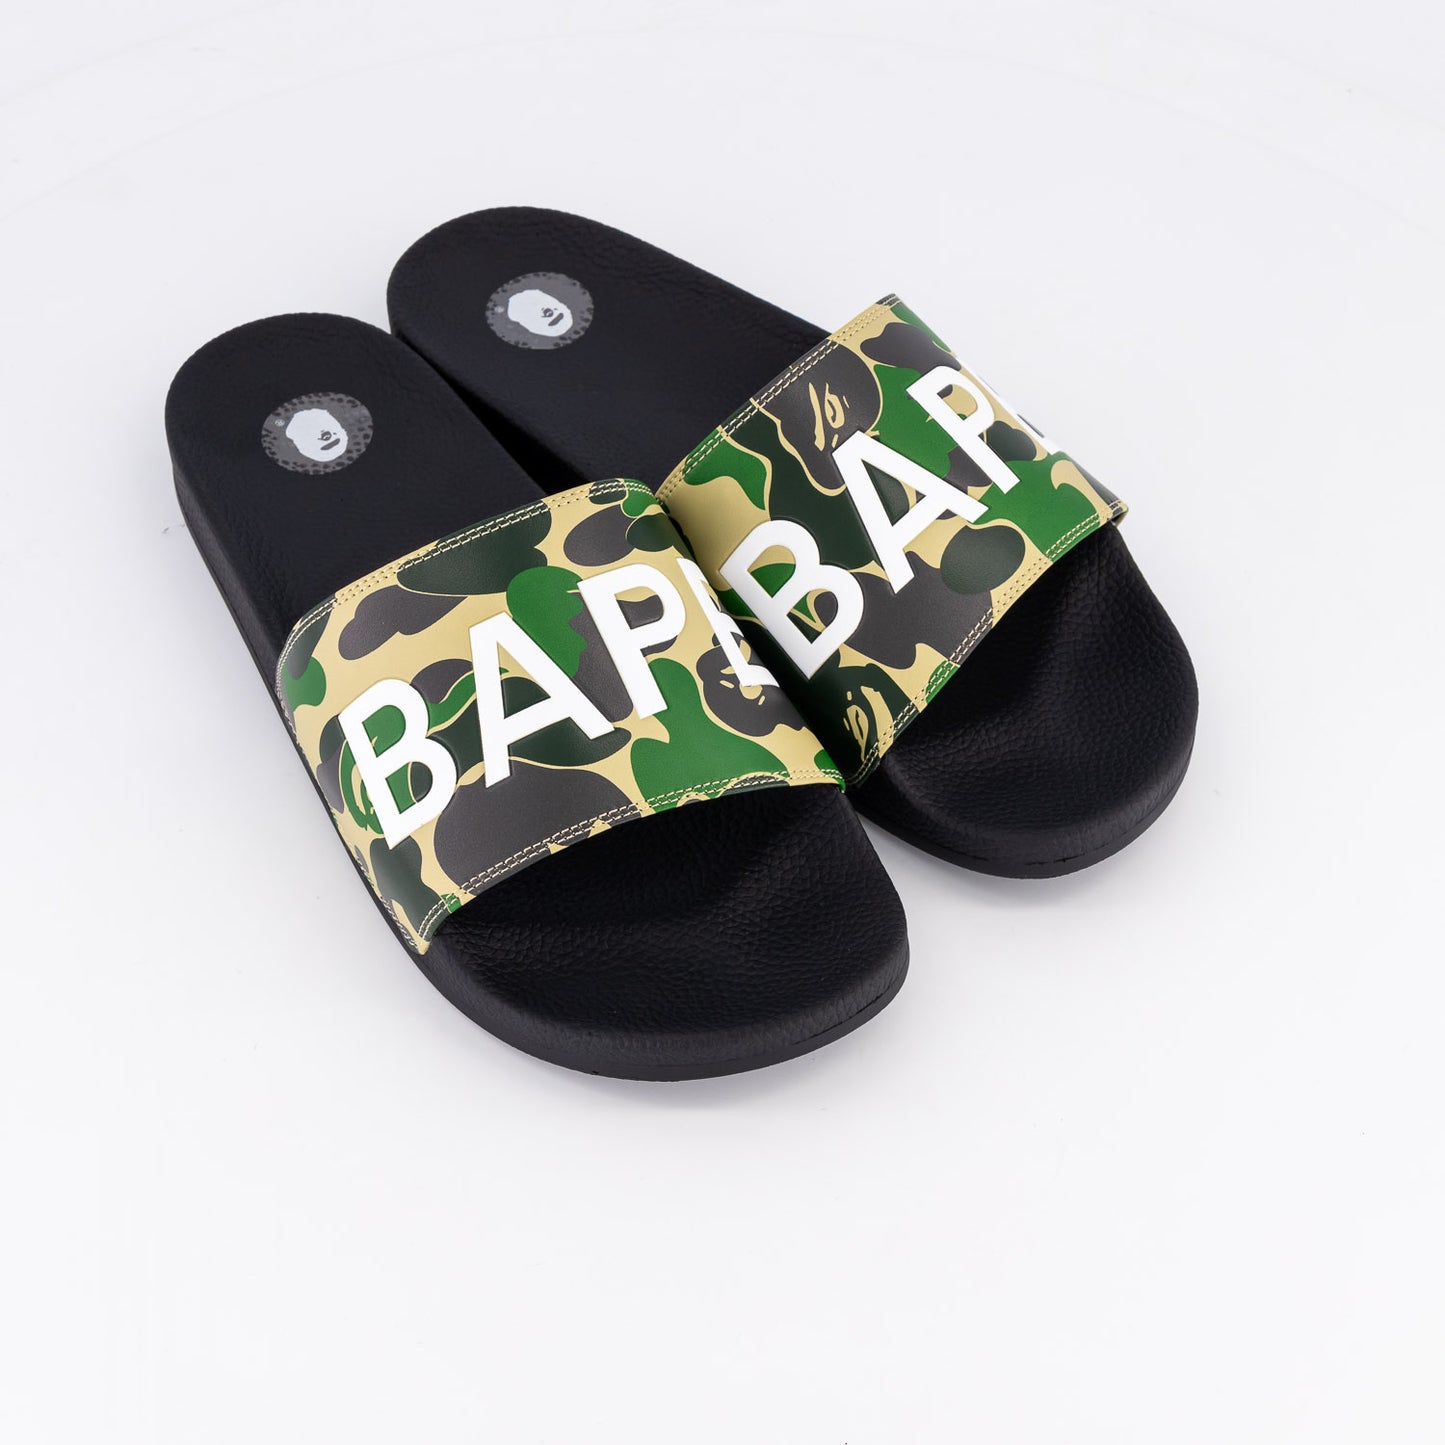 Bape ABC Camo Green Slide Sandals